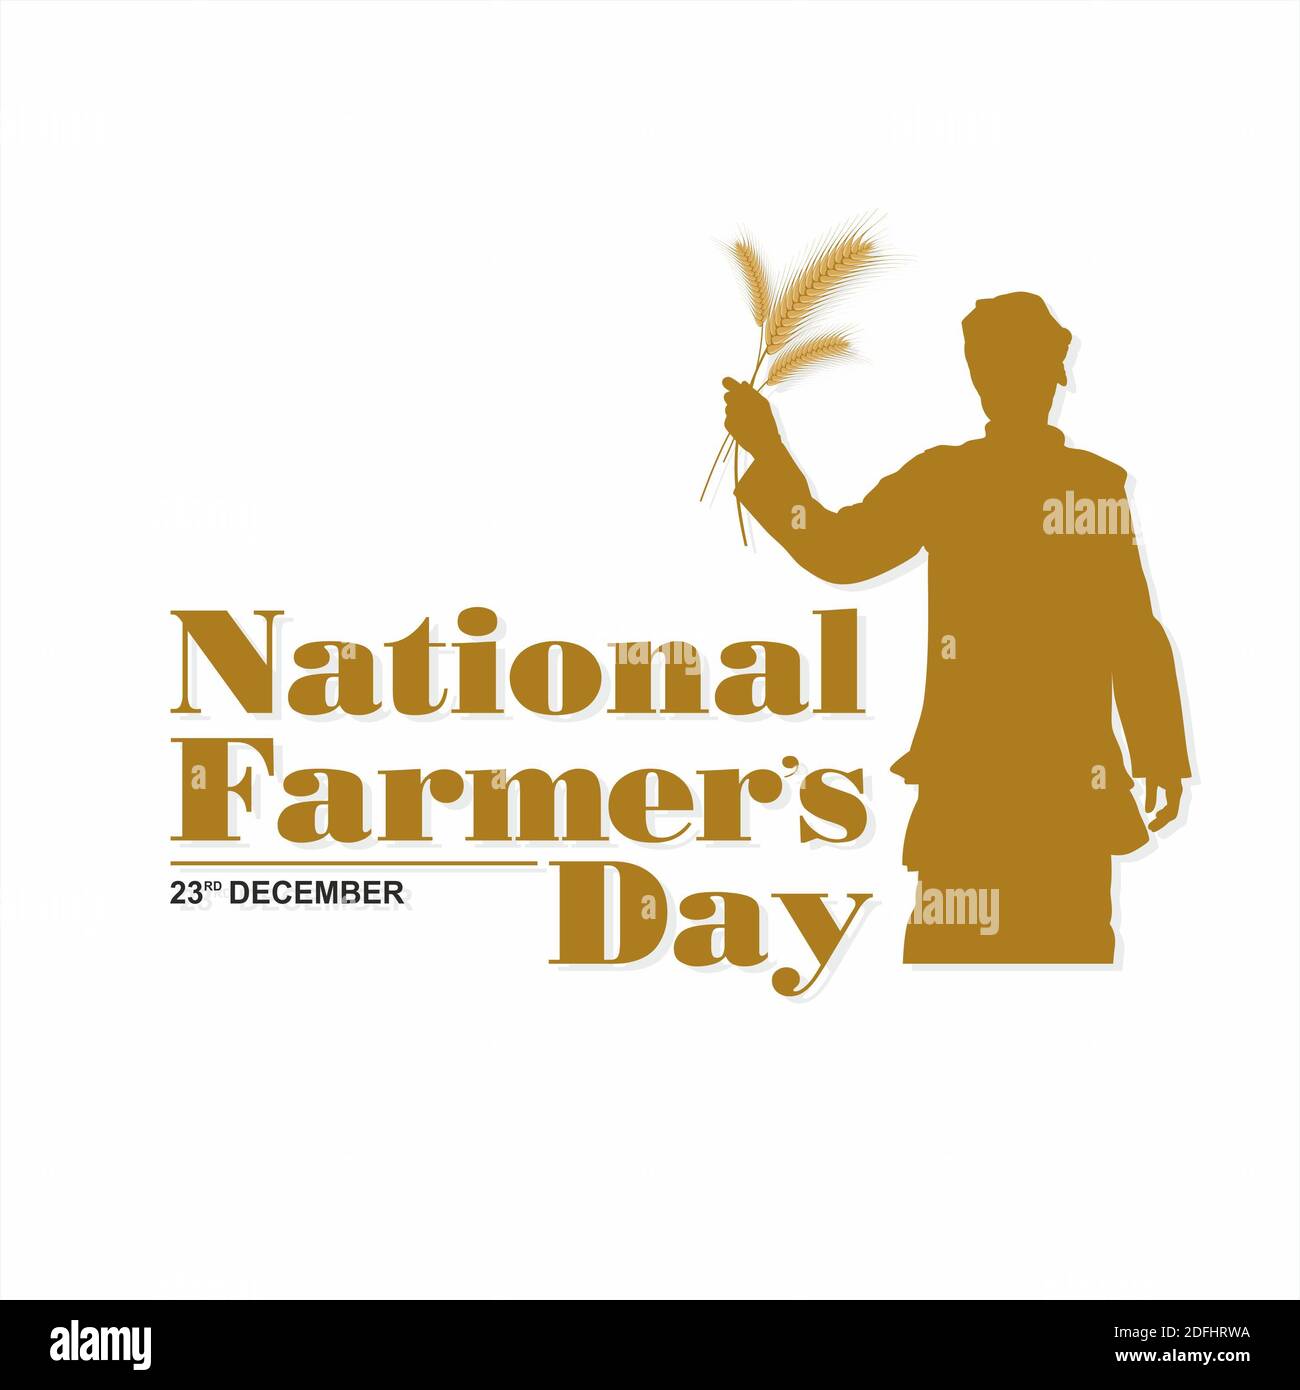 National Farmers Day Banner Design - Illustration Stock Photo - Alamy